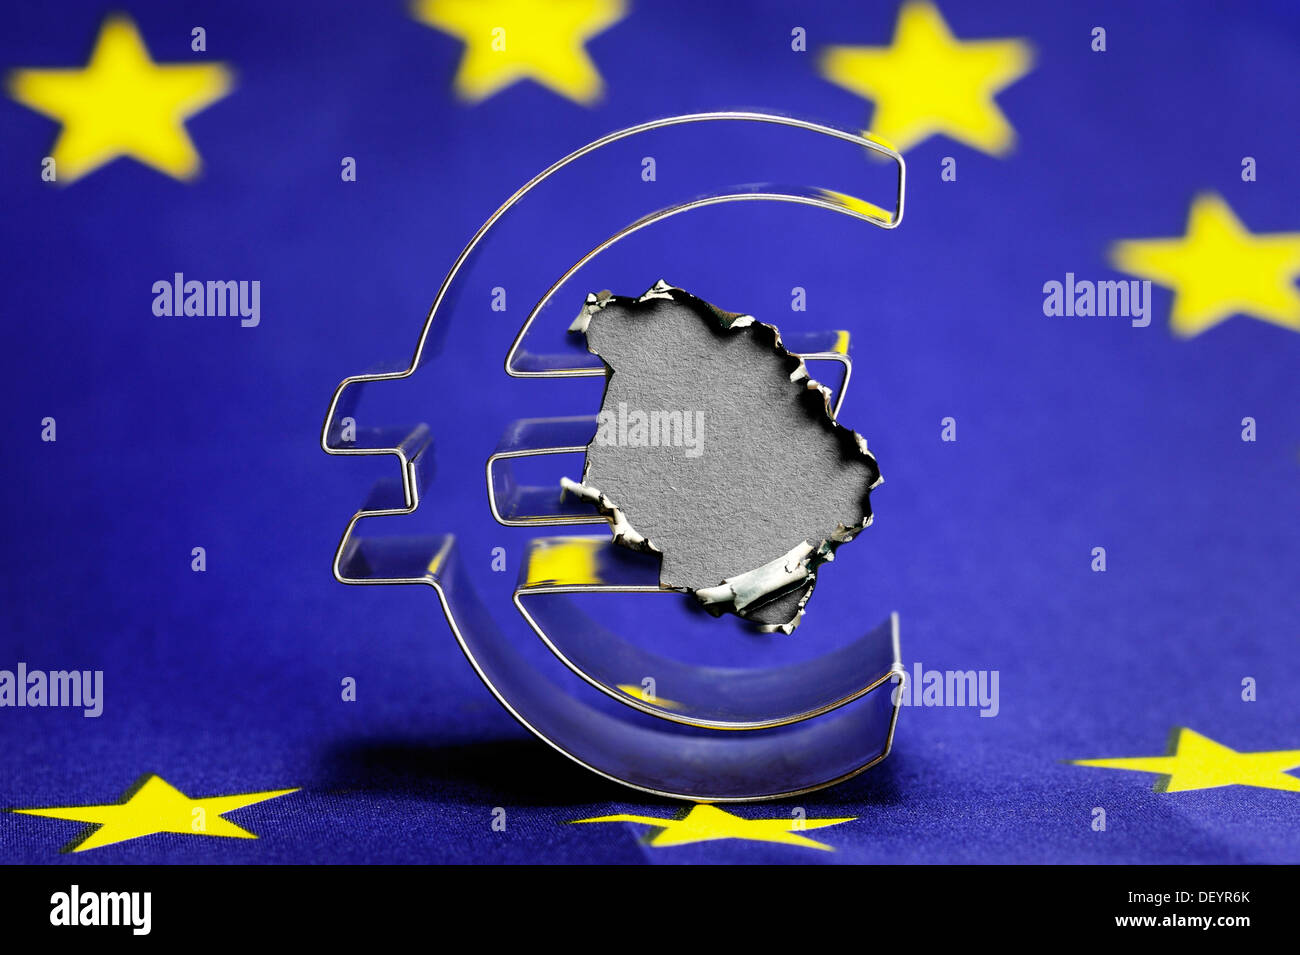 Euro symbol on the EU flag with a burn mark, symbolic image of the euro crisis Stock Photo